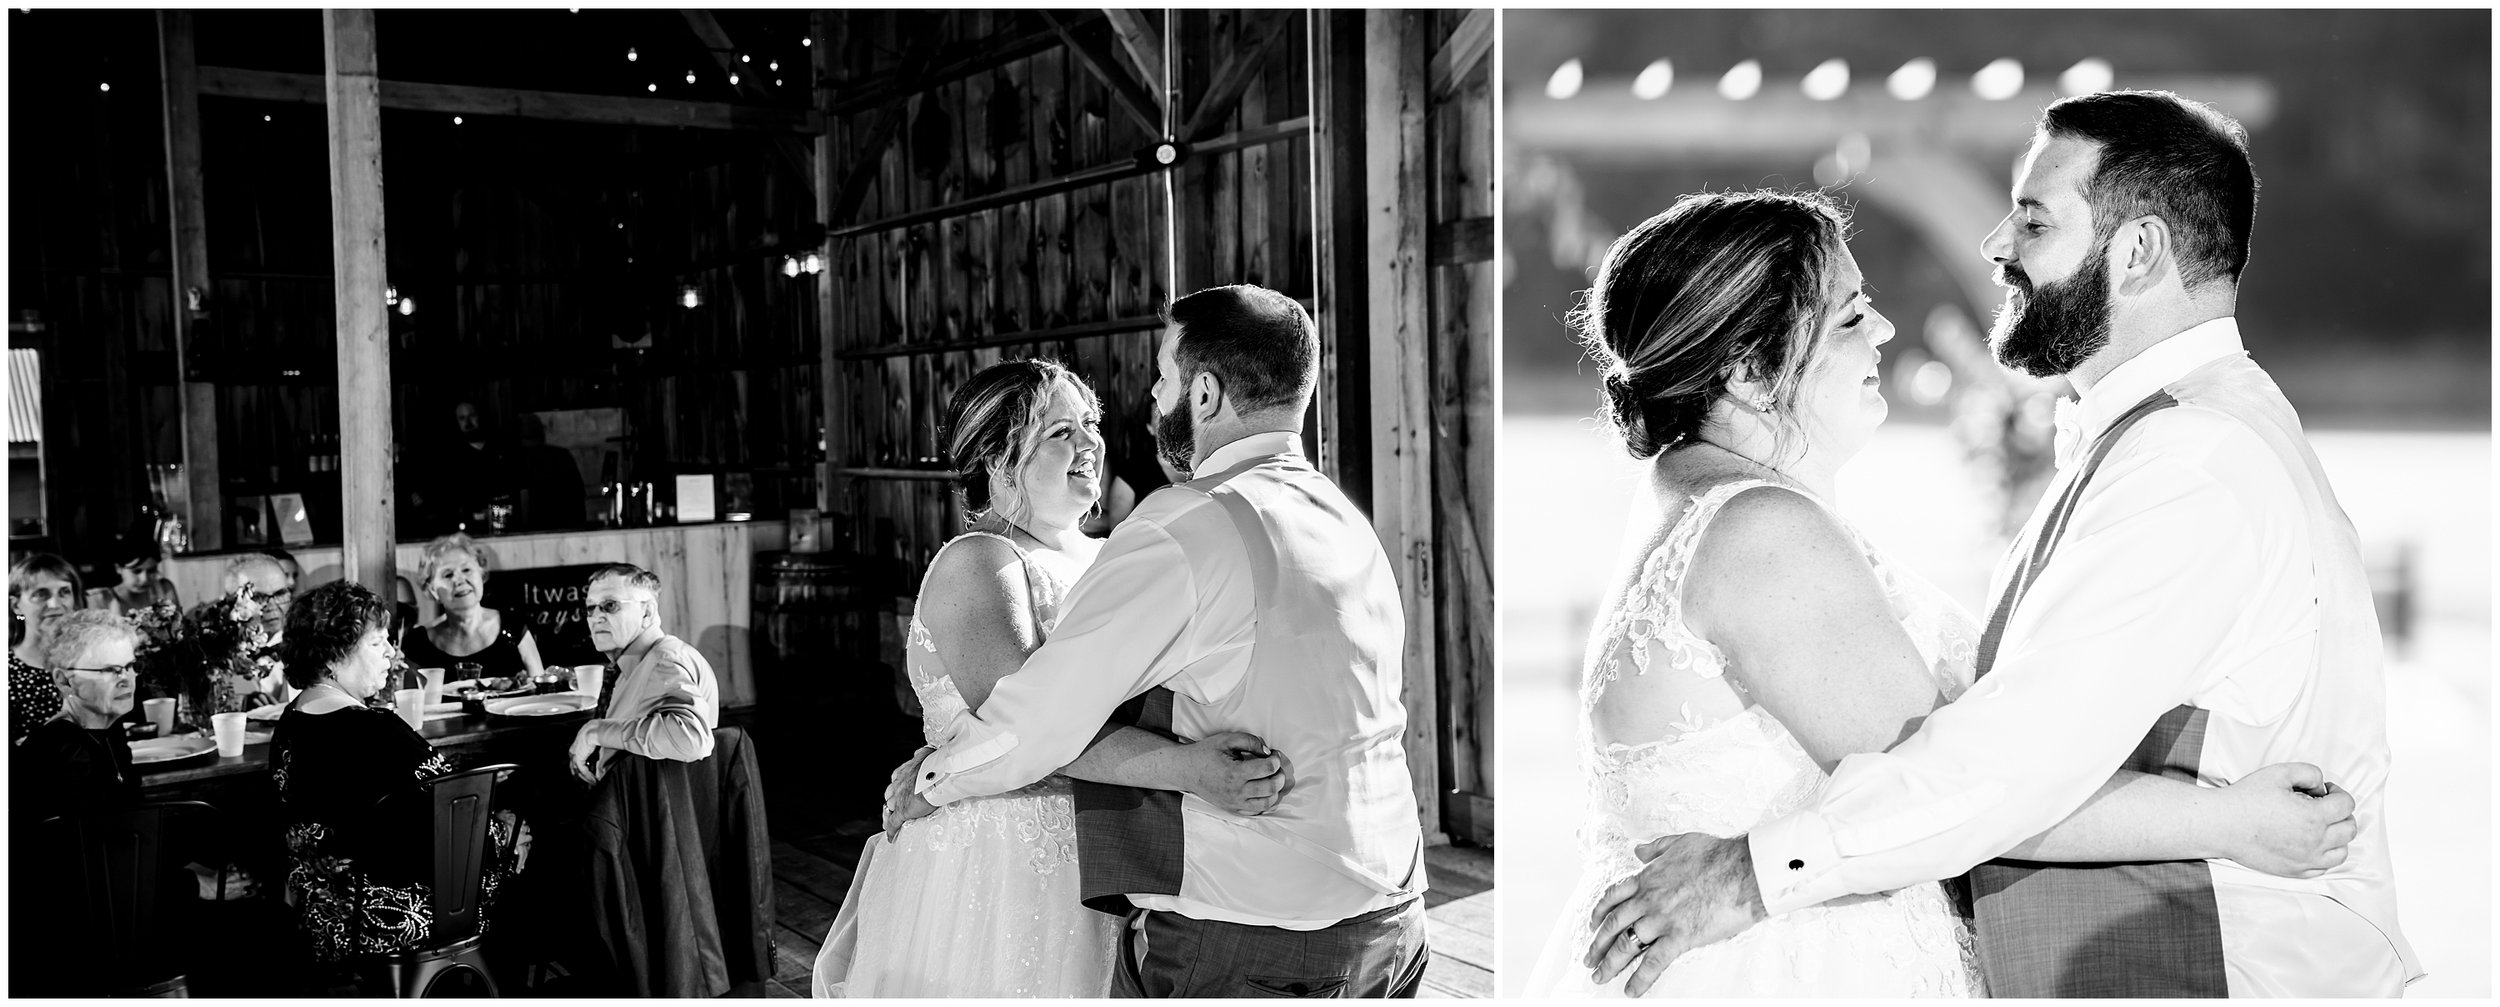 Harmony Hill Wedding Barn Photographers, Rockland Maine Wedding Photographers, Two Adventurous Souls- 062223_0054.jpg